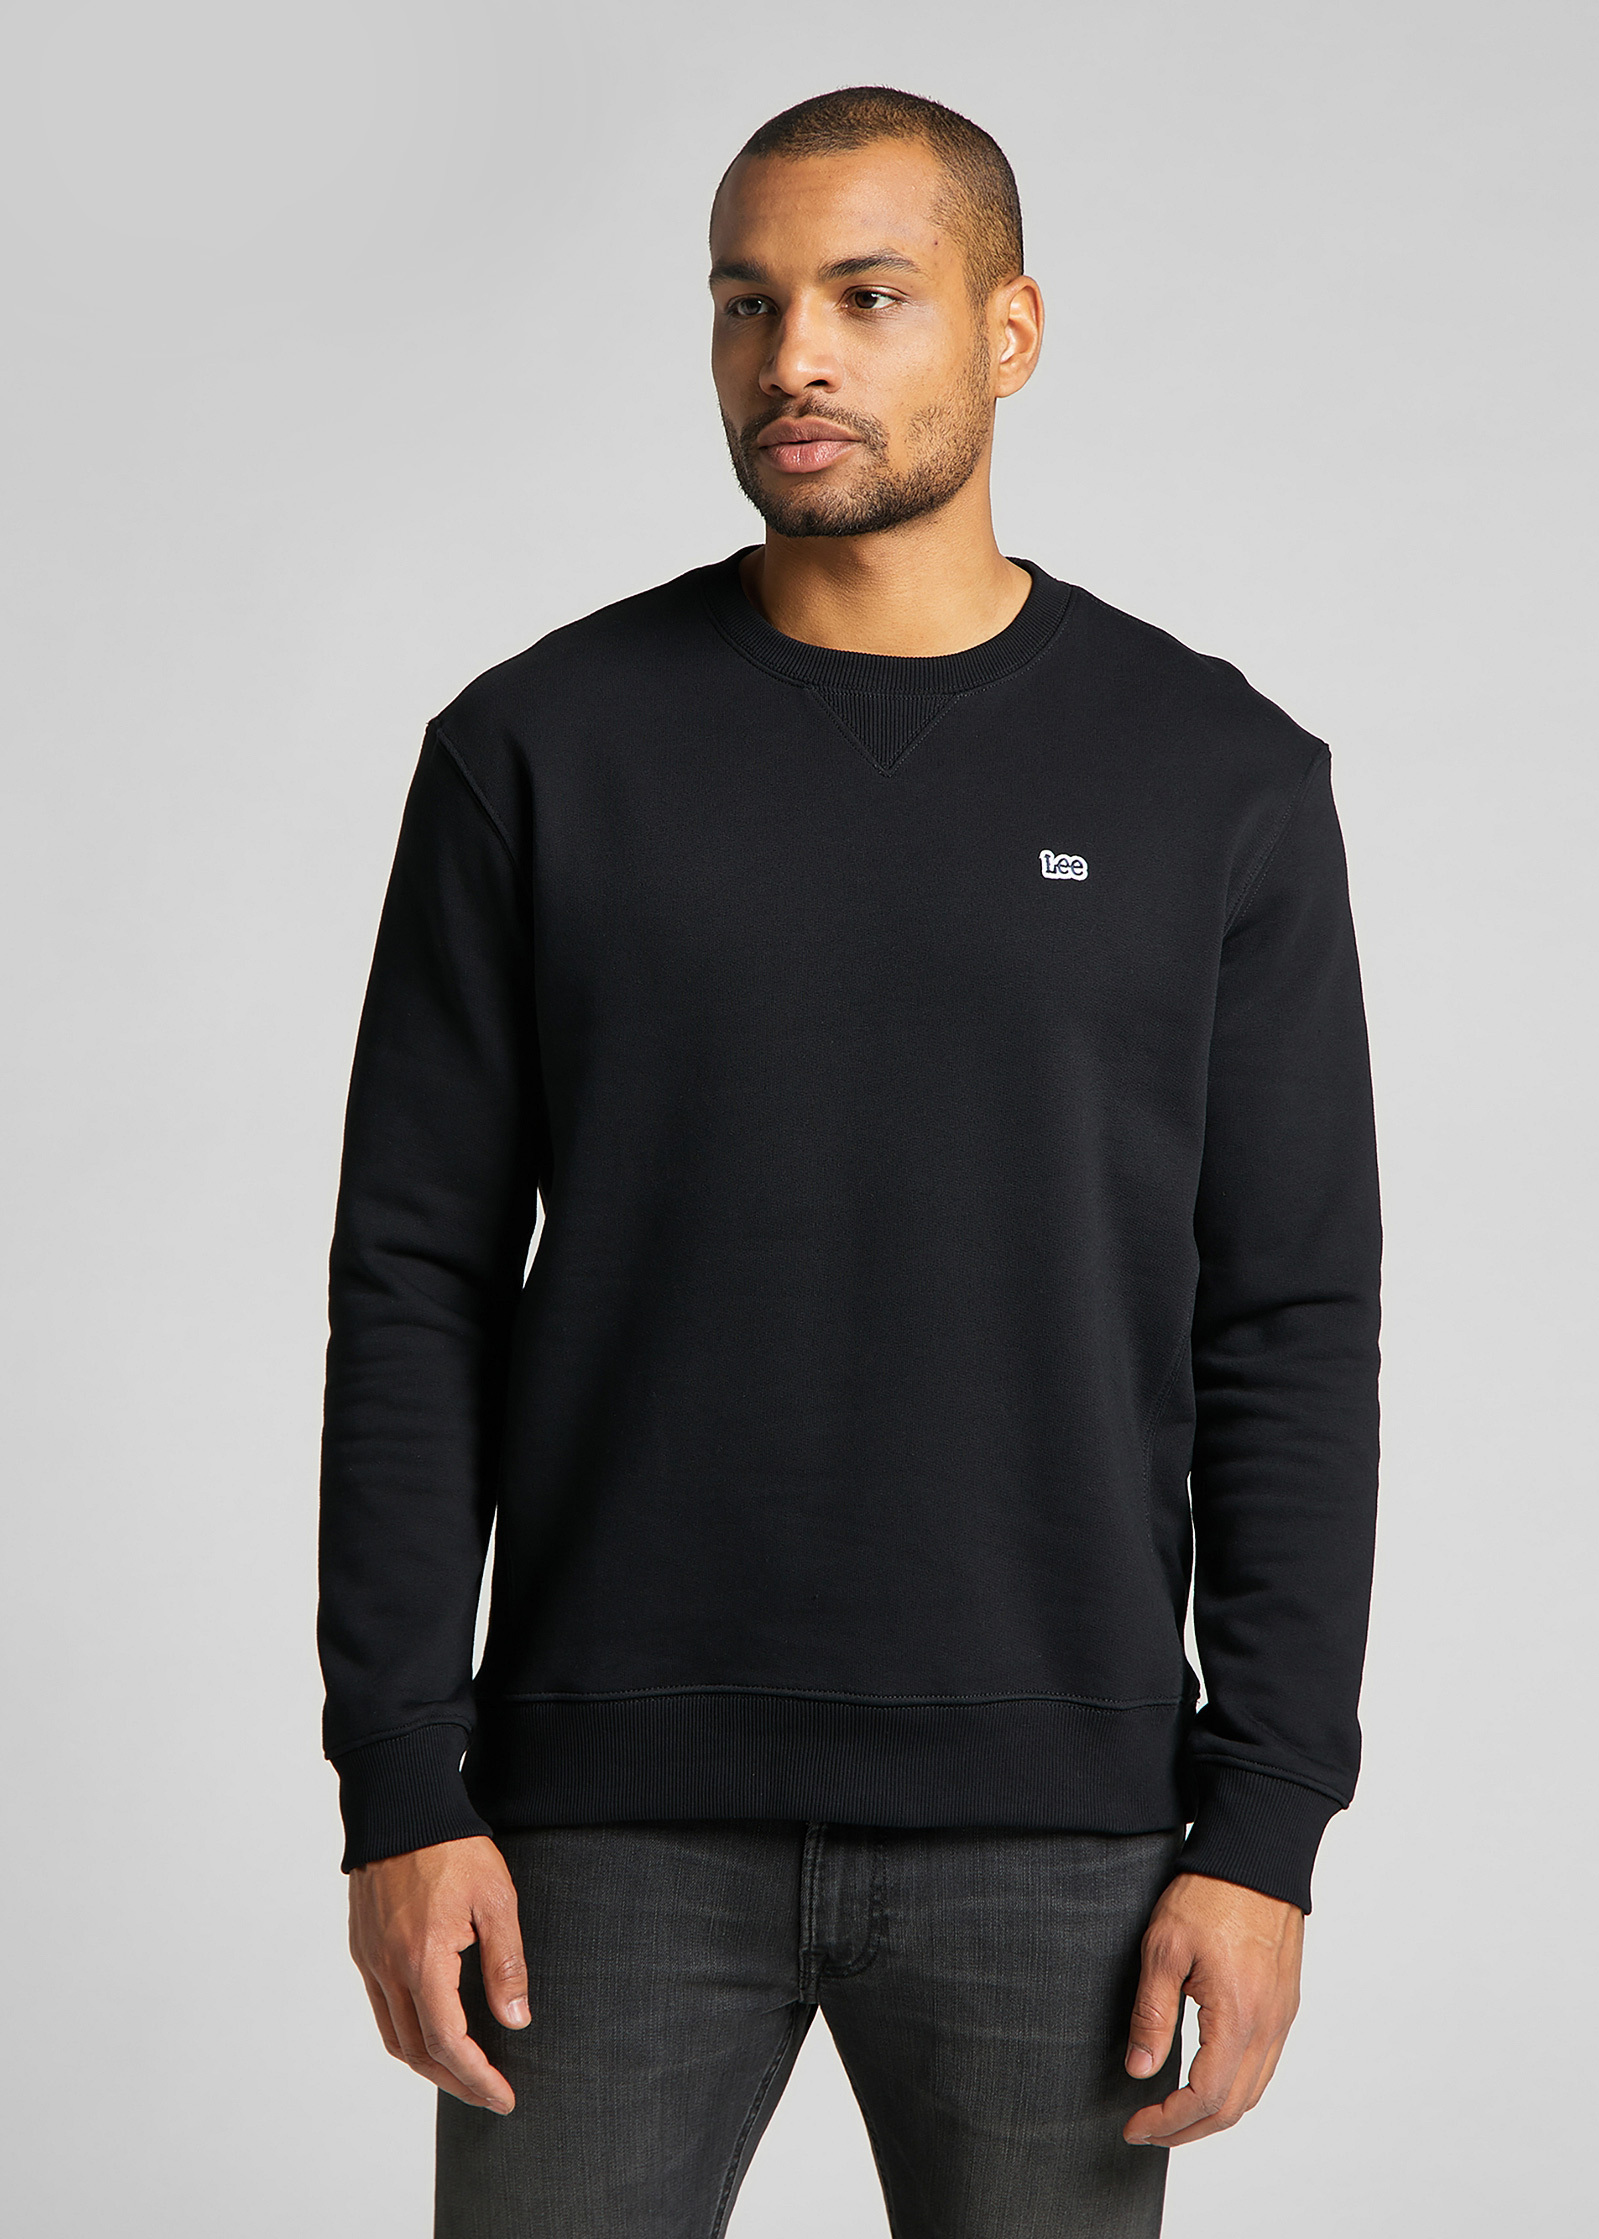 Lee Plain Crew Sweatshirt Black - L81ITJ01 Size XL